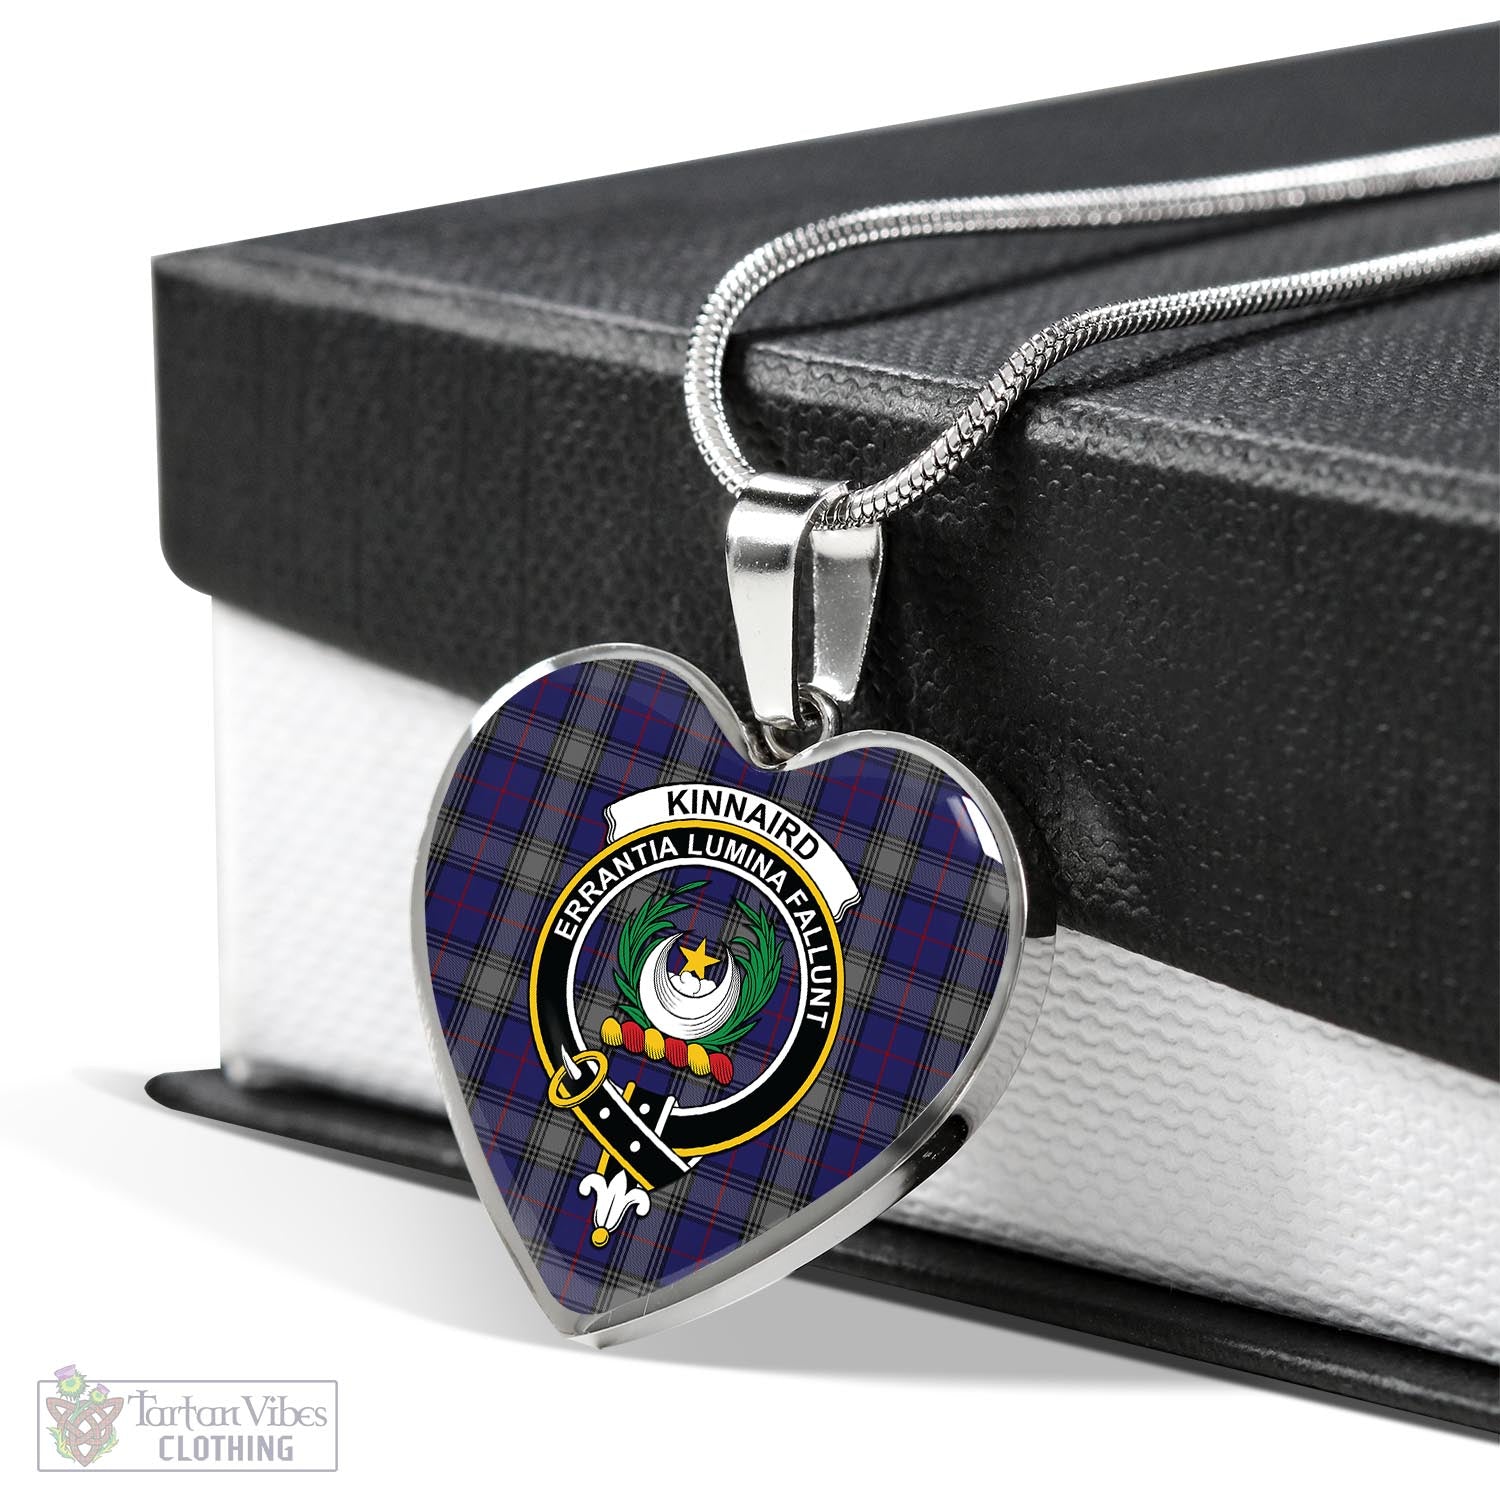 Tartan Vibes Clothing Kinnaird Tartan Heart Necklace with Family Crest